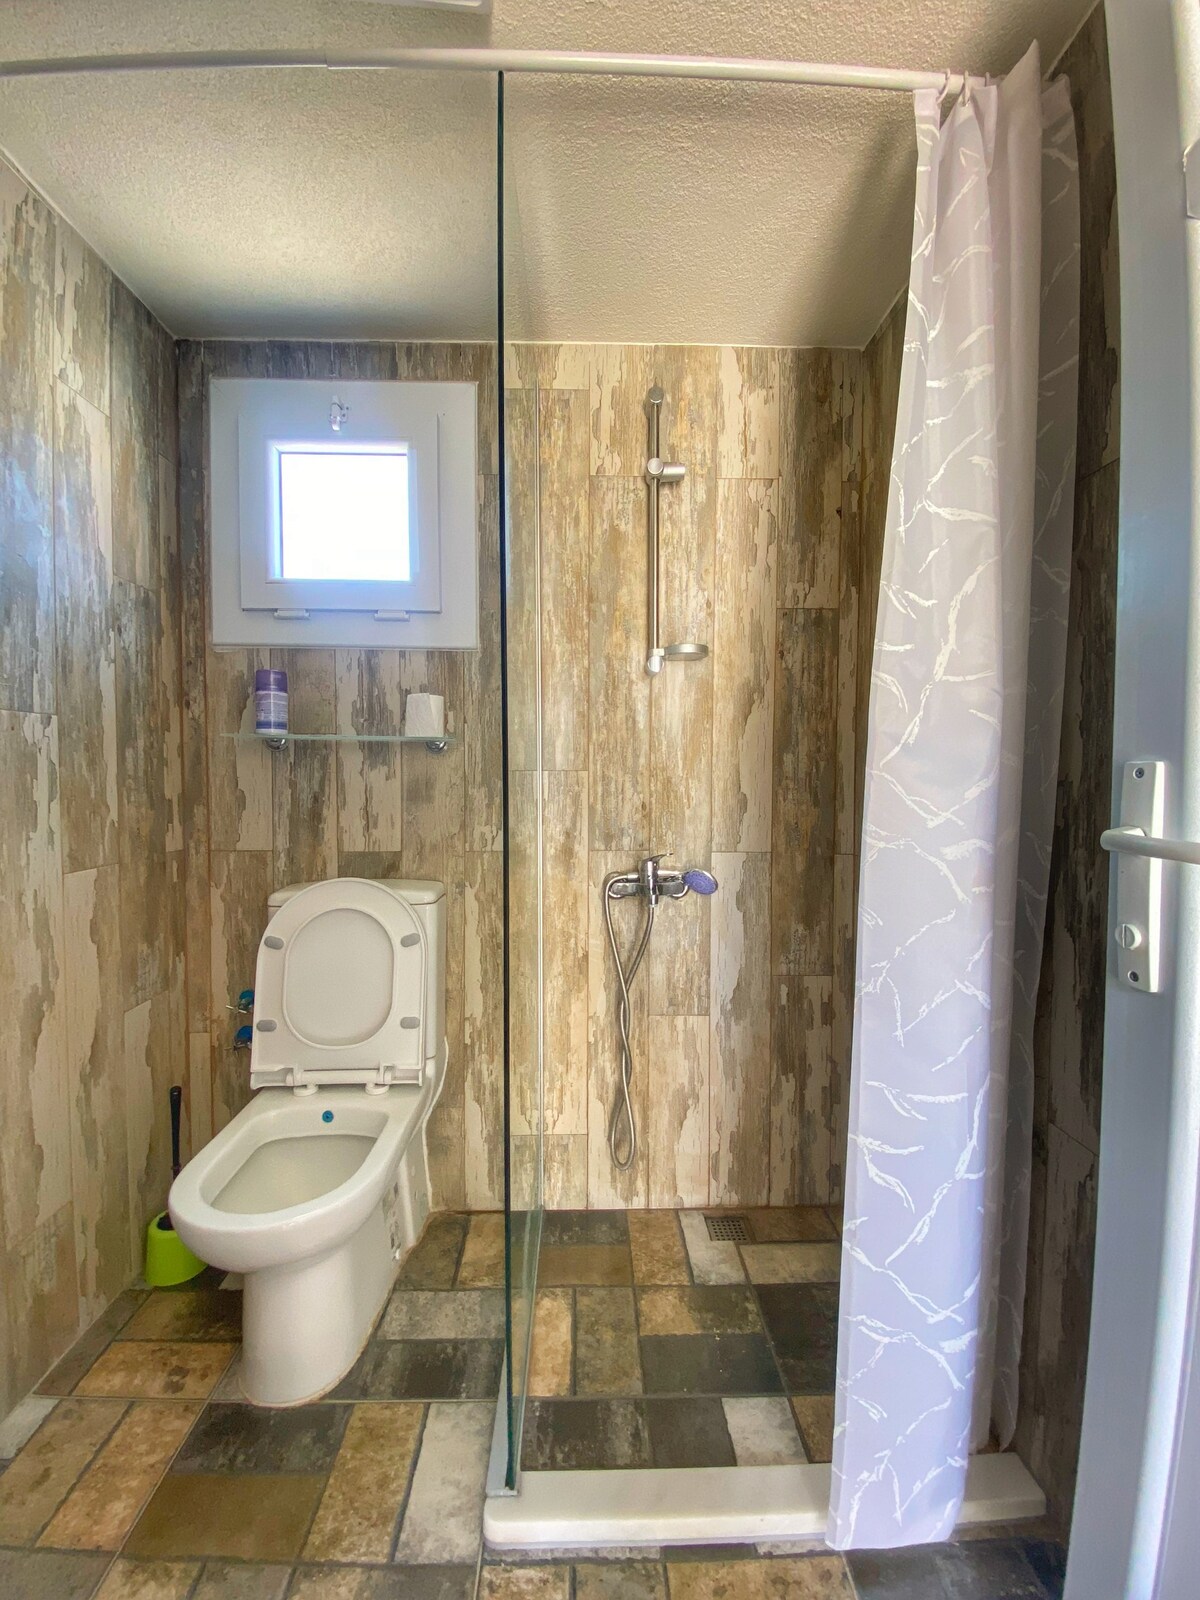 twen beded sharing room/bathroom